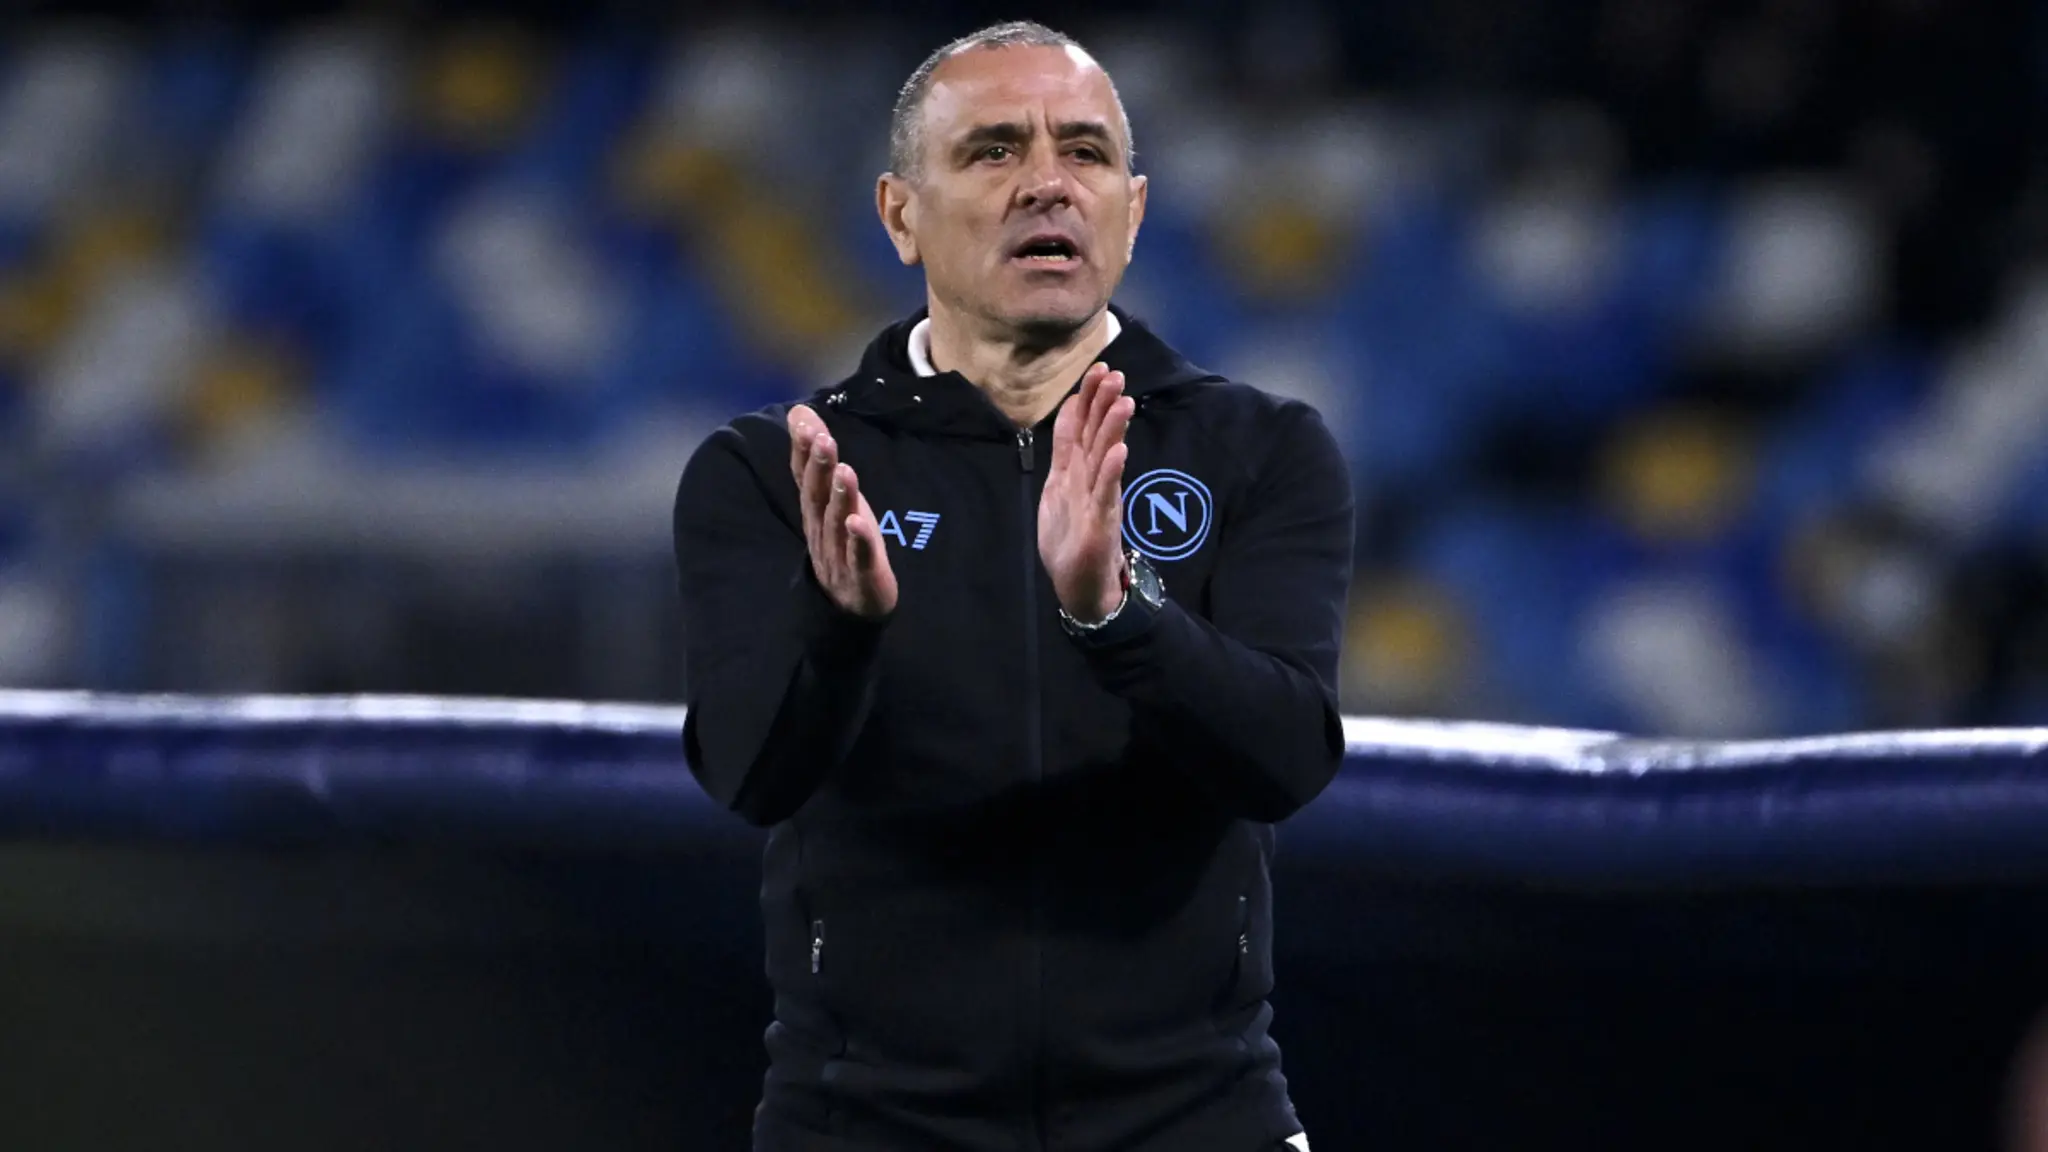 Napoli Boss Francesco Calzona Takes Responsibility for ‘Catastrophe’